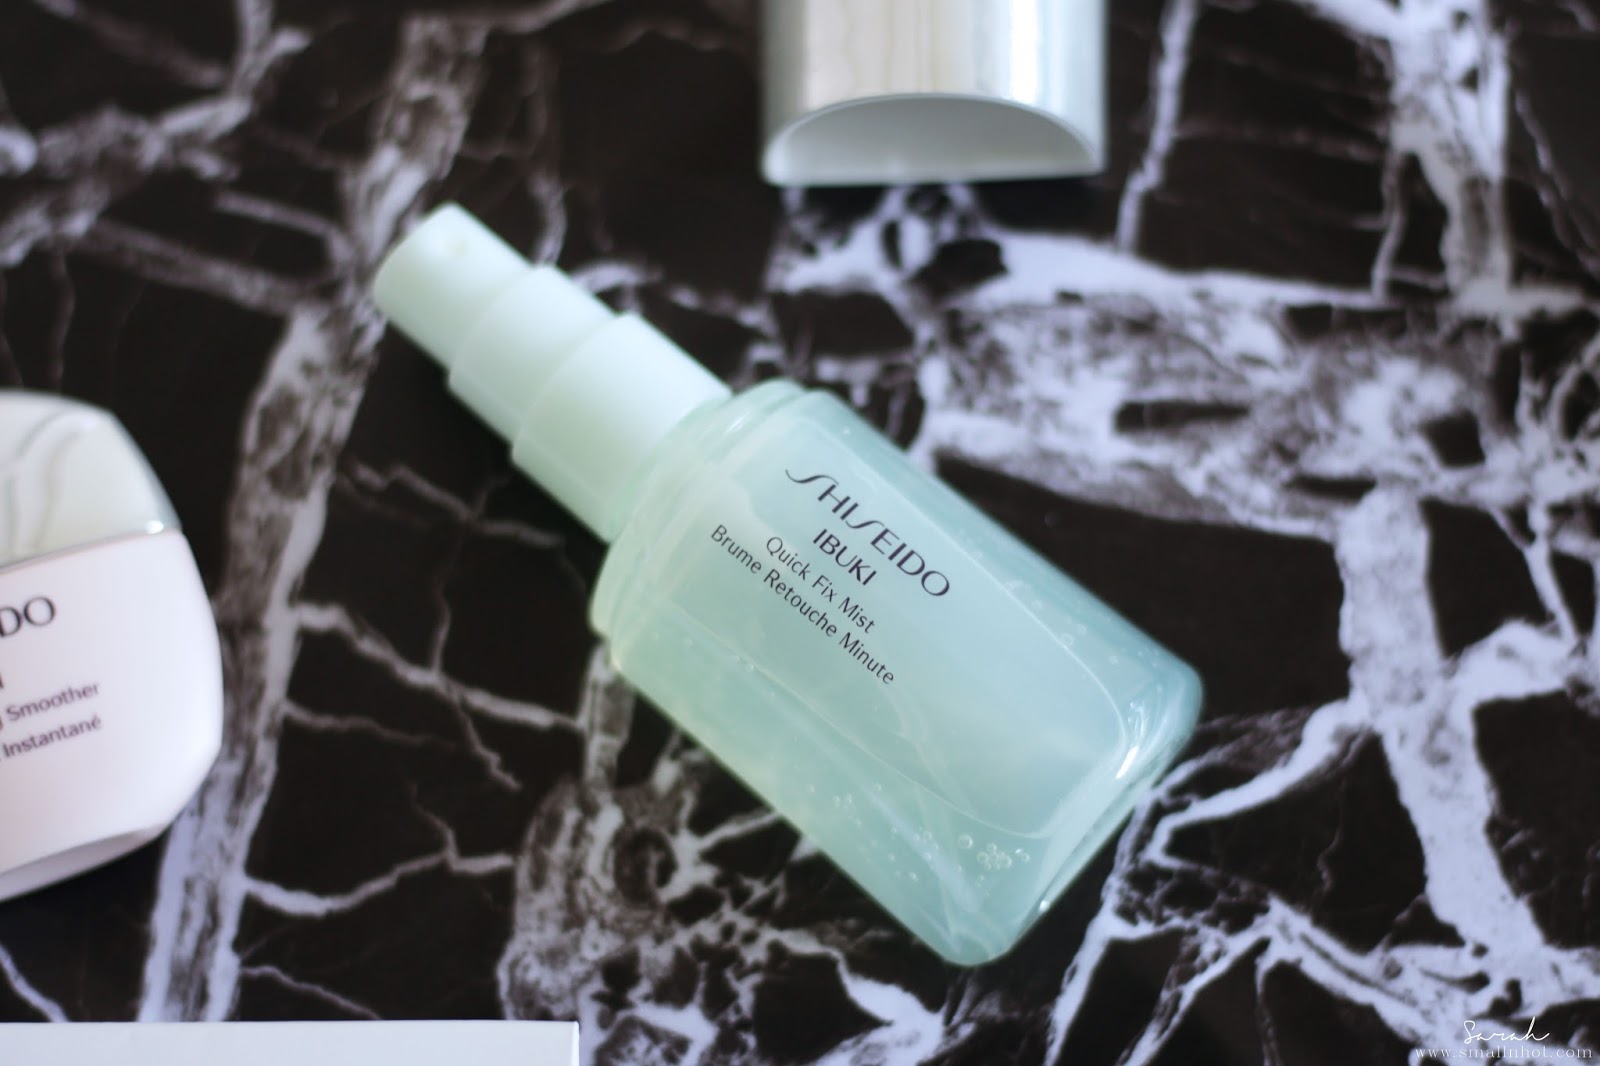 shiseido ibuki smart filtering smoother review